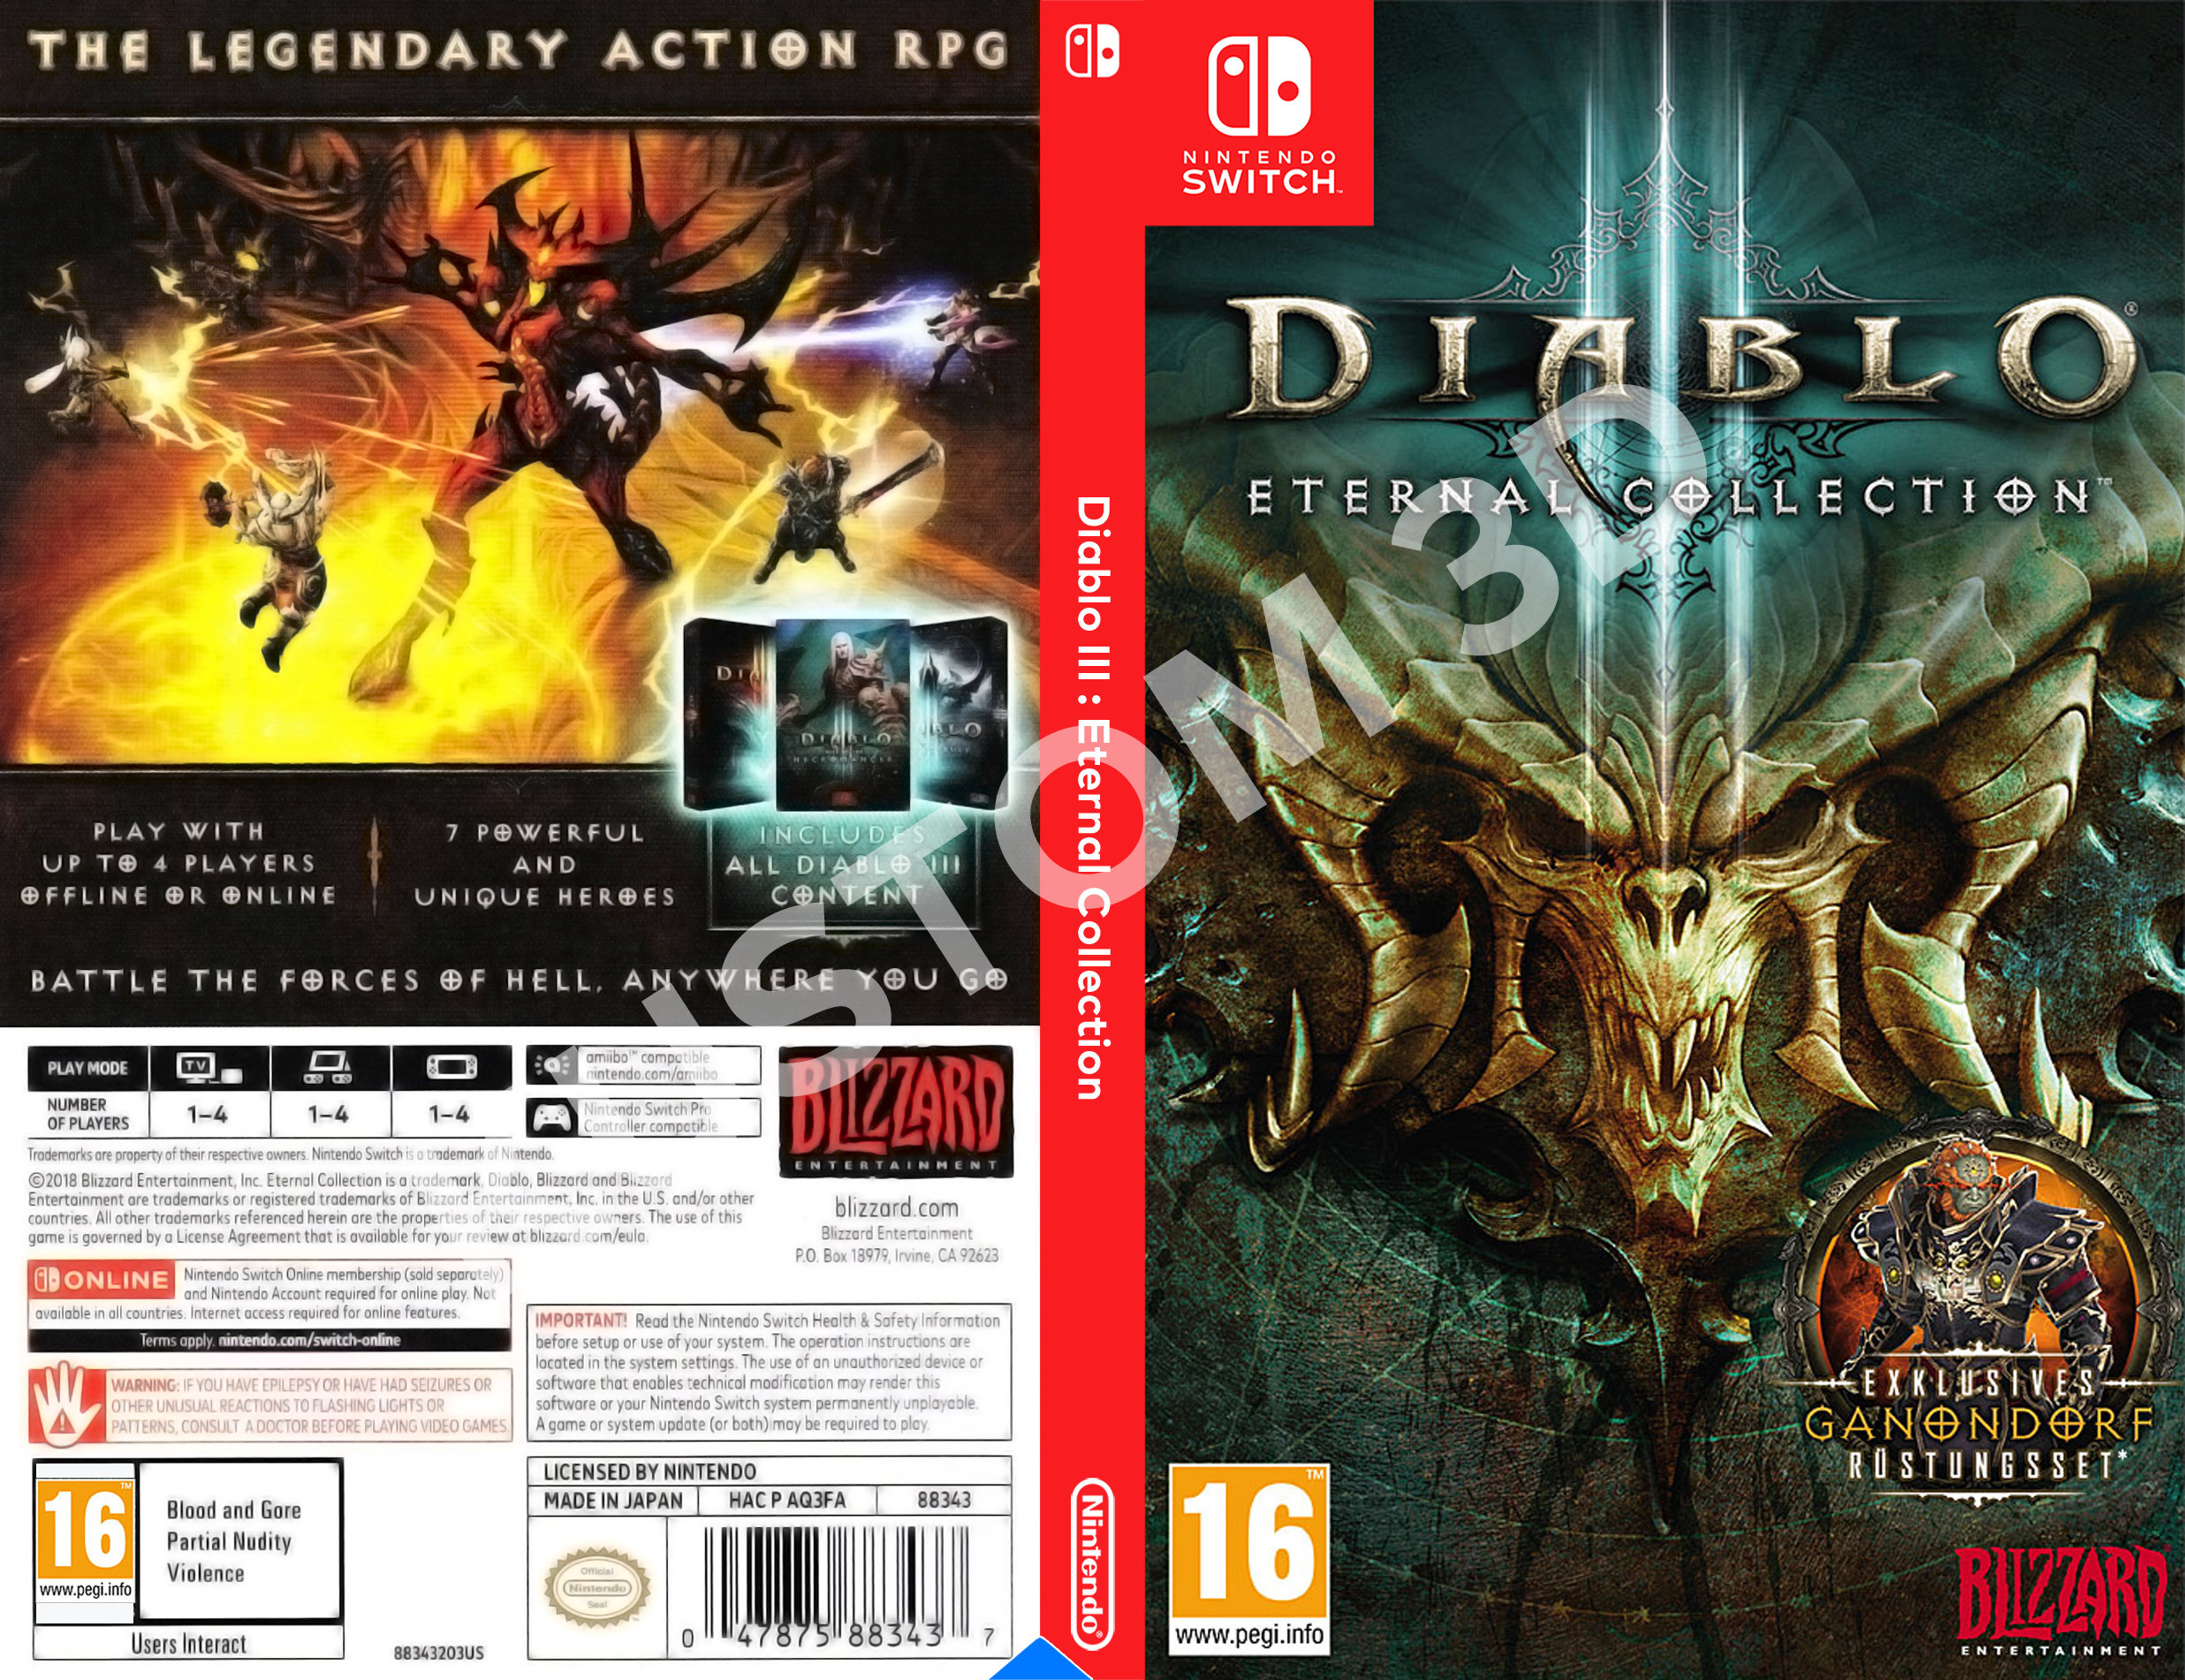 Diablo 3 nintendo. Diablo 3 Eternal collection Nintendo Switch. Diablo III: Eternal collection Нинтендо обложка. Diablo III: Eternal collection обложка. Диабло 3 Нинтендо свитч.